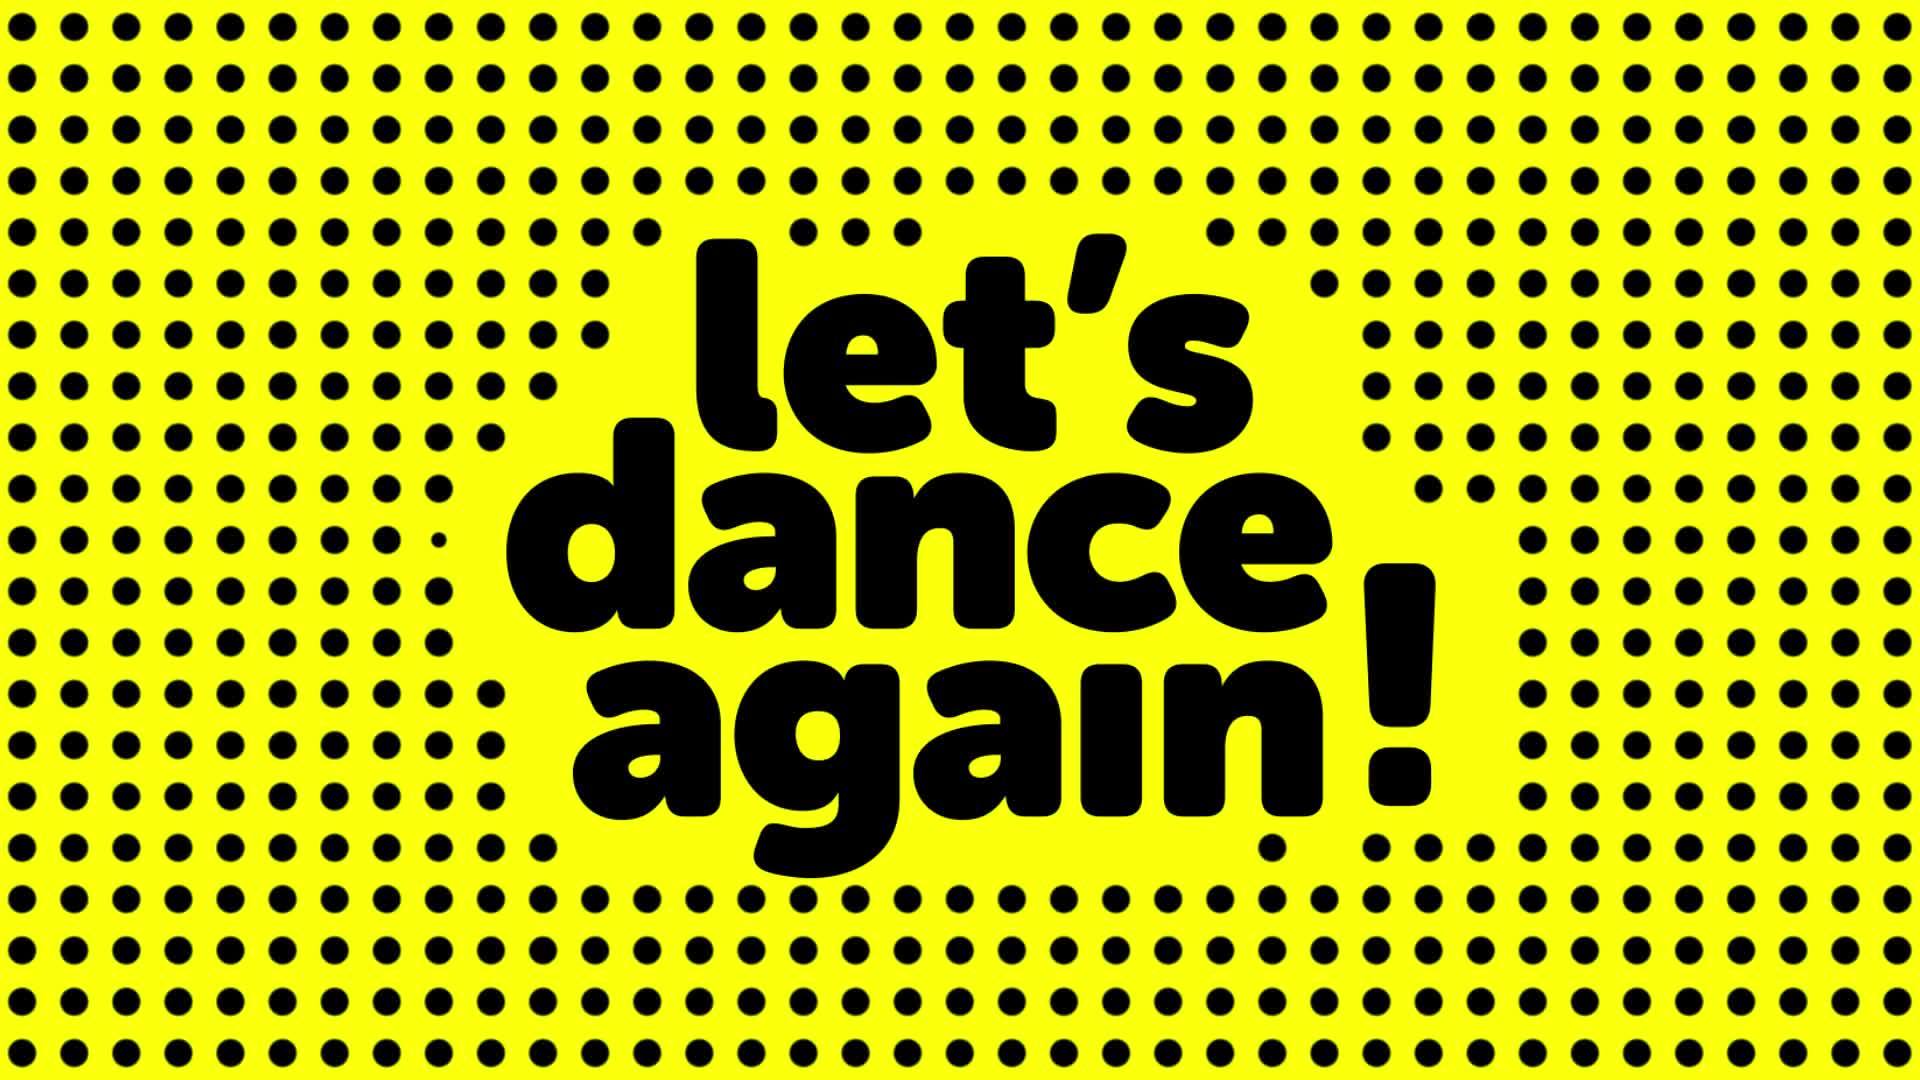 40Up: Let's Dance Again